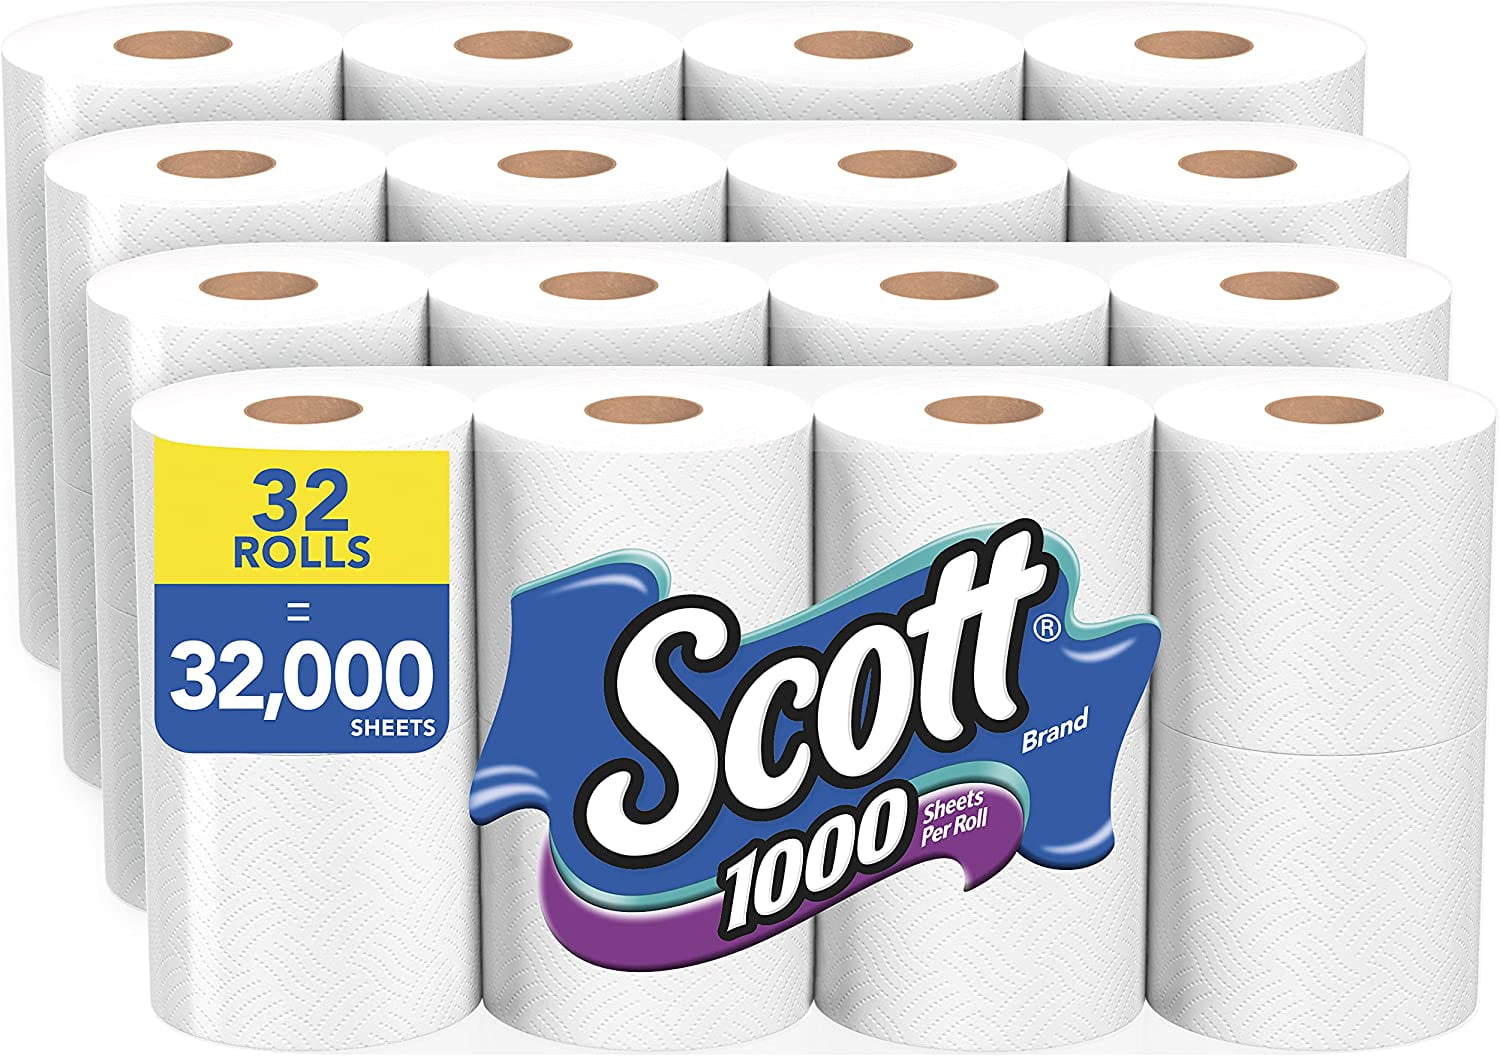 Scott 1000 Sheets Per Roll Toilet Paper 32 Rolls/Case 1Ply 1000 Sheets/Roll 